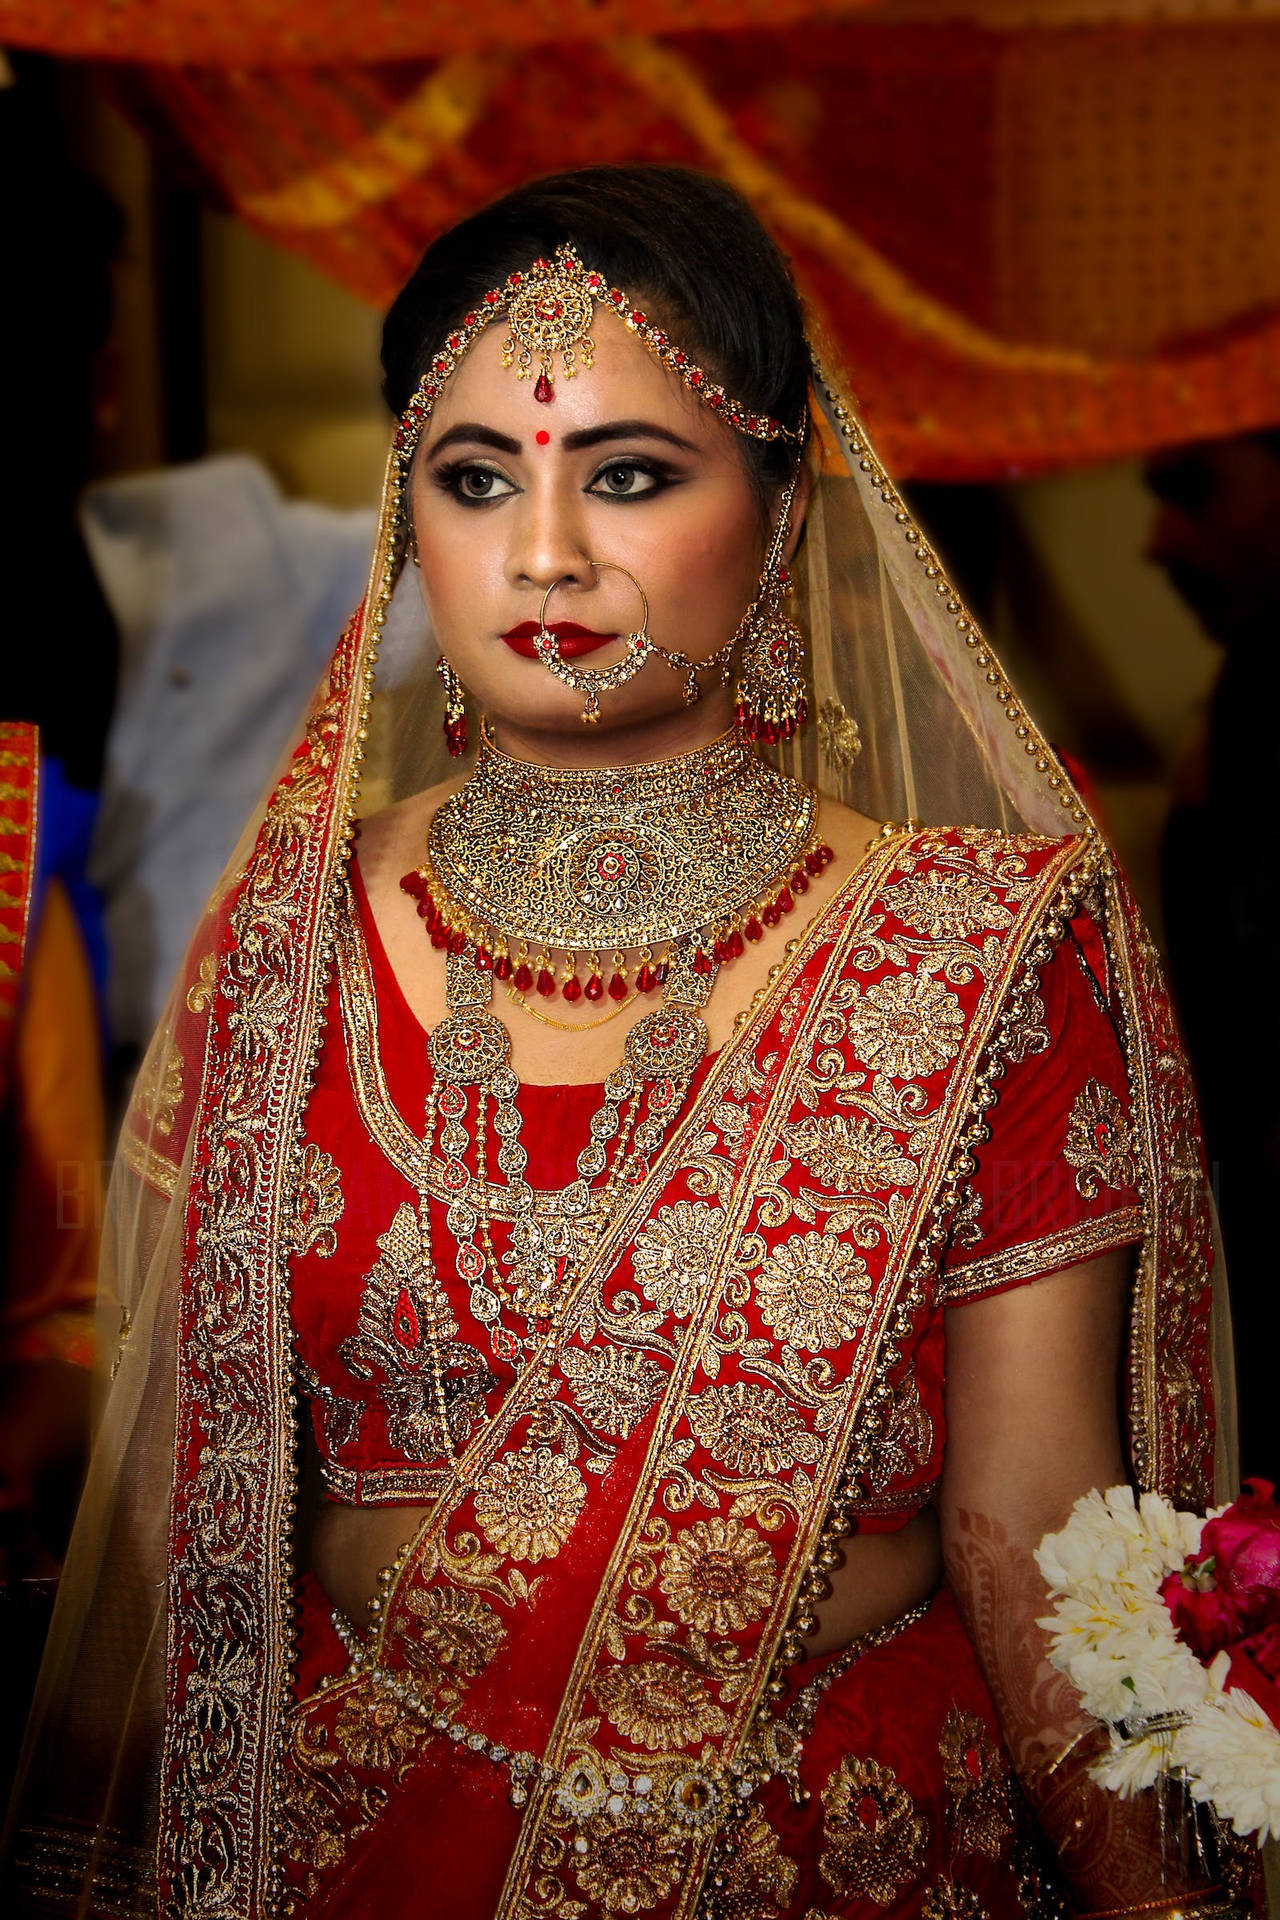 Gold Jewelry Red Sari Indian Wedding Background